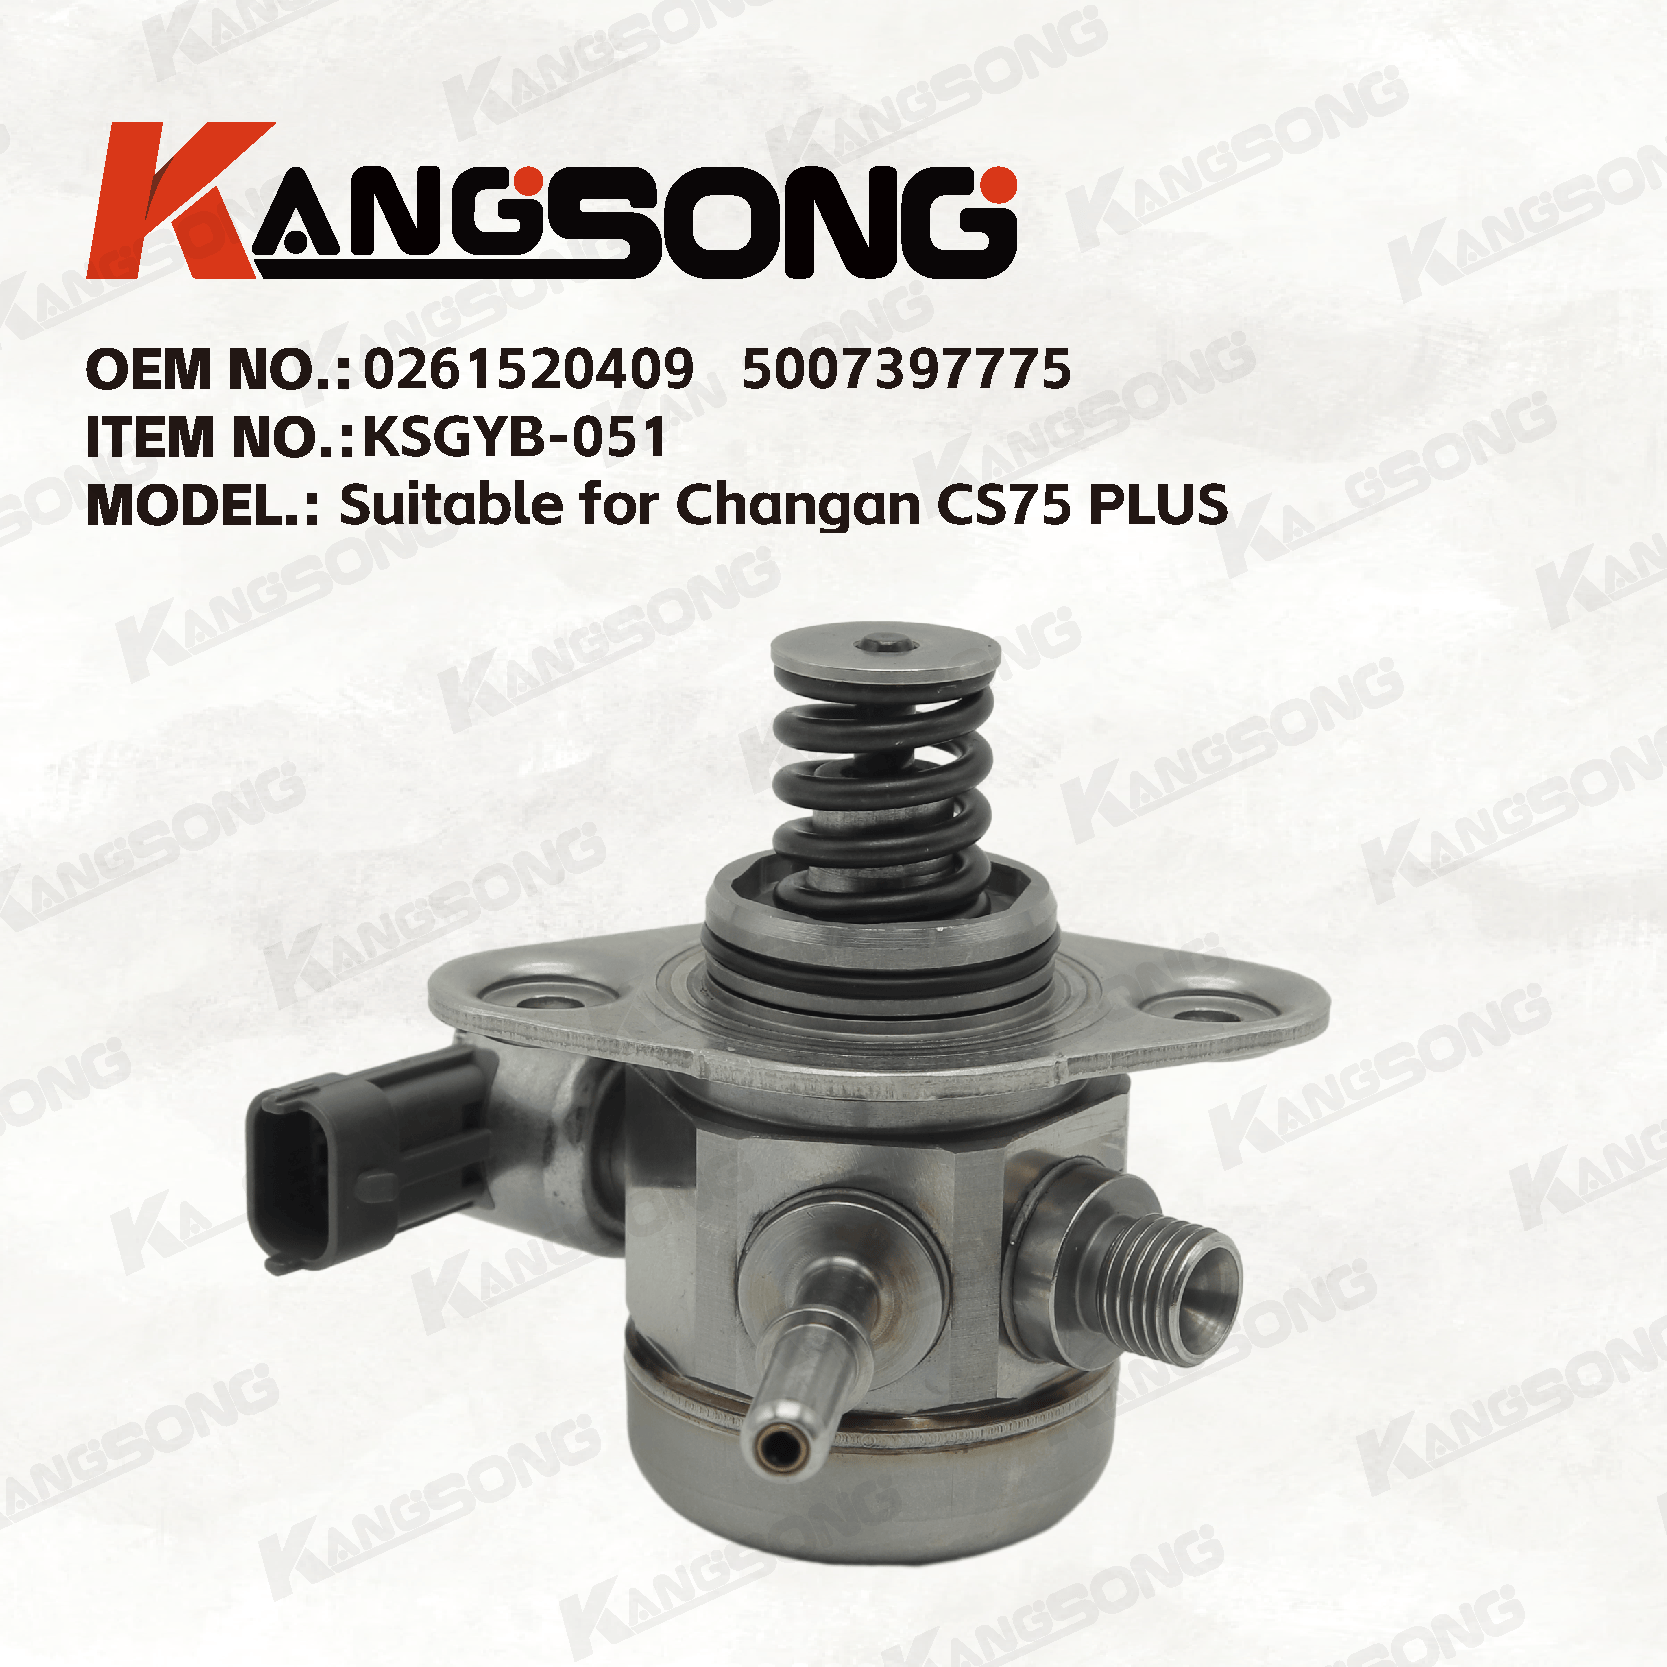 Applicable to  Changan CS75 PLUS/0261520409   5007397775/High pressure fuel pump/KSGYB-051